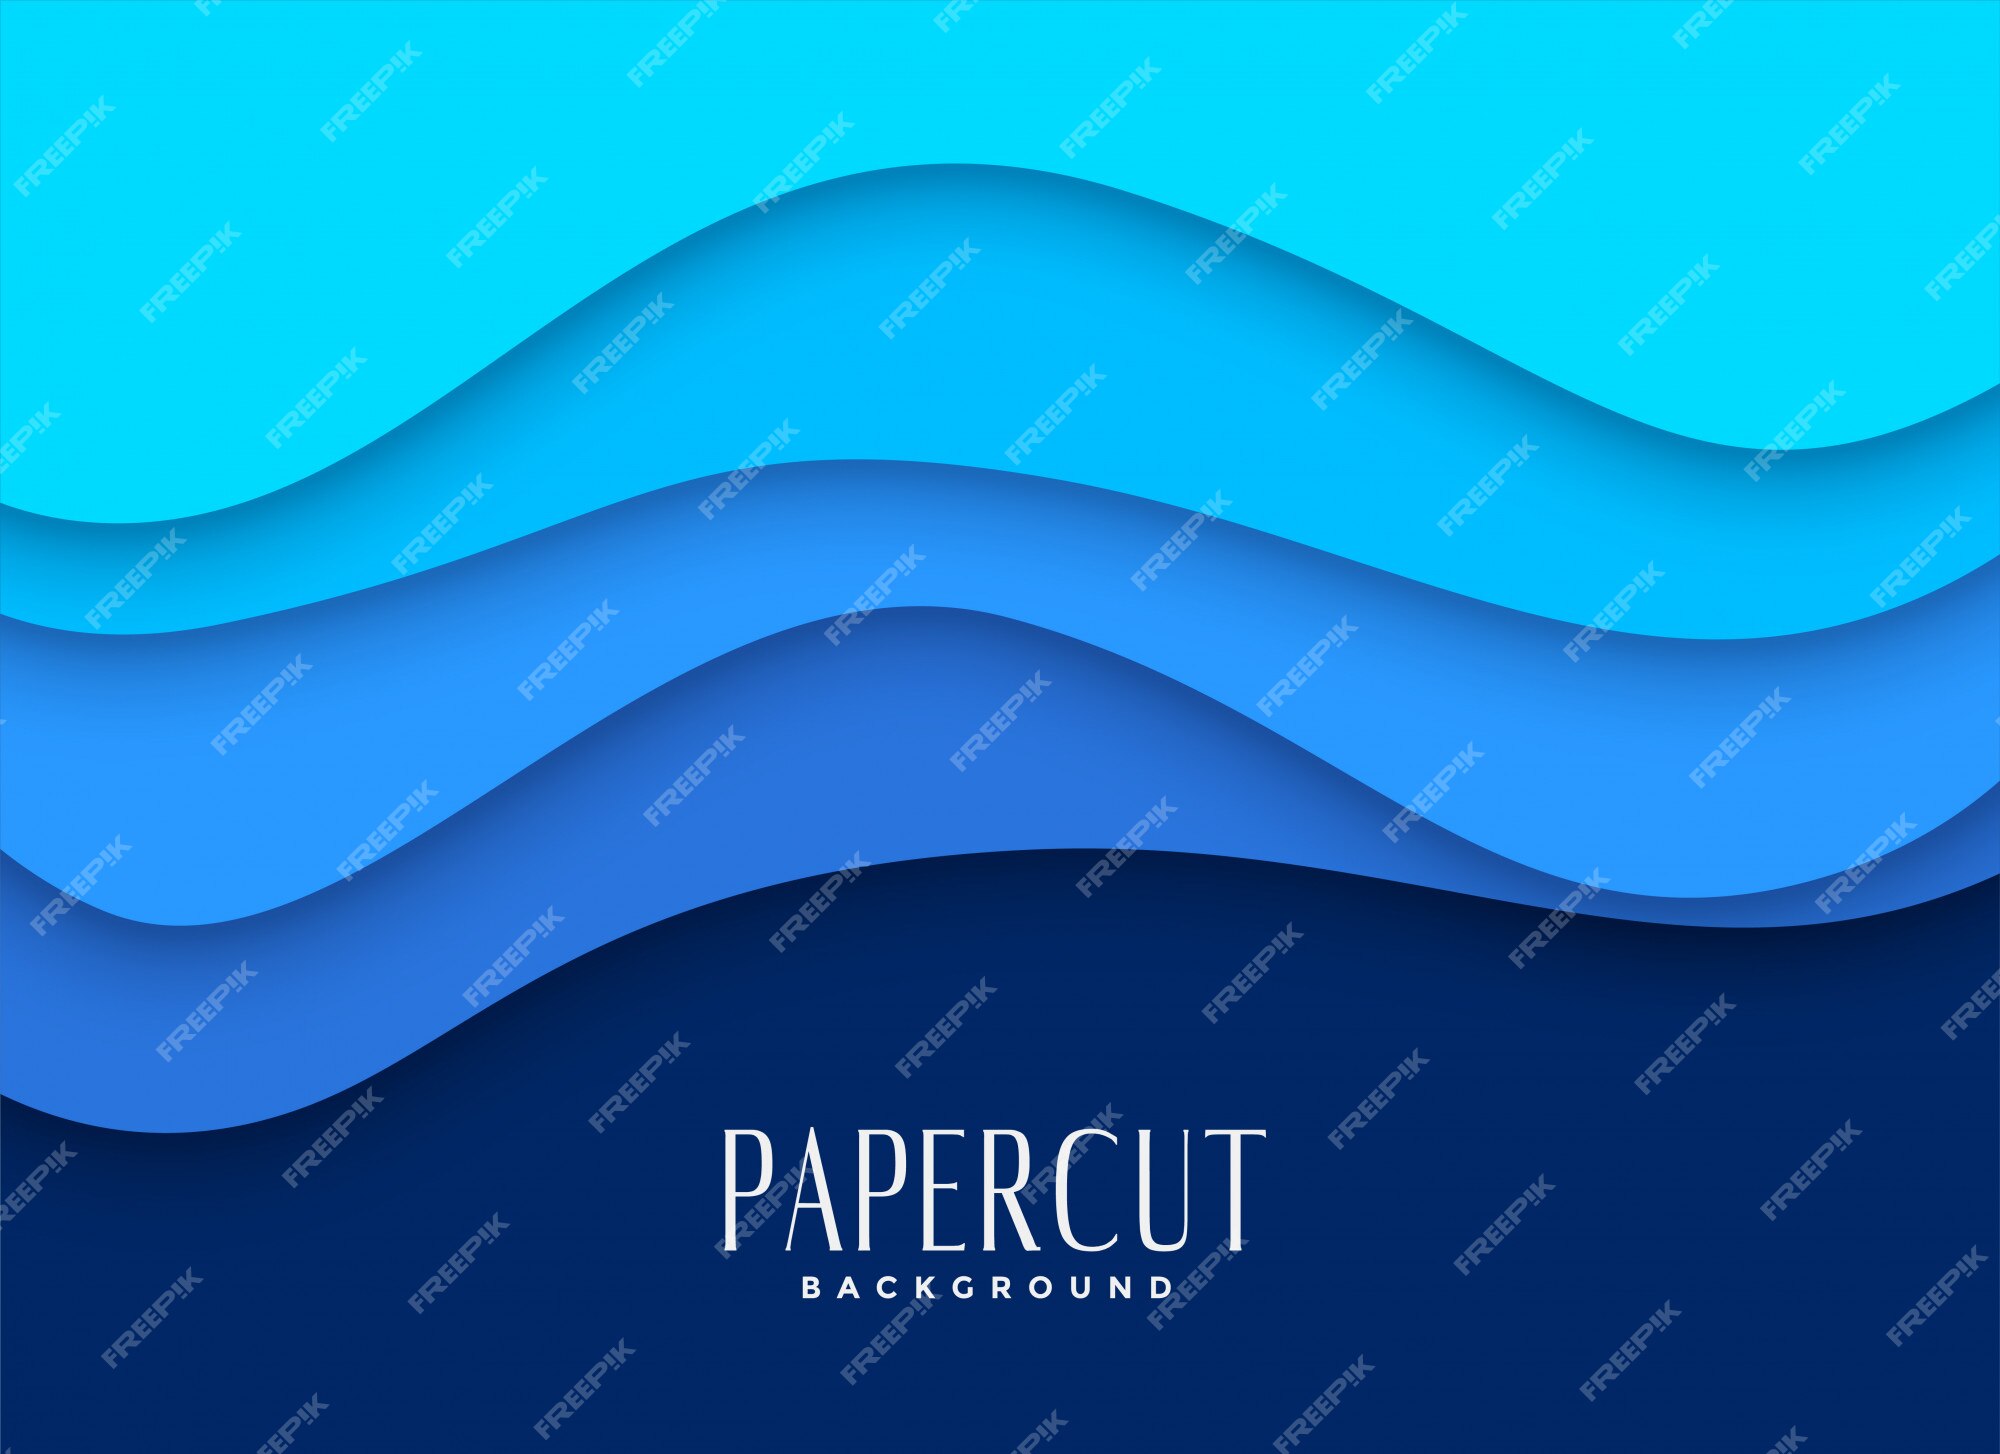 Paper Cut Wave Images - Free Download on Freepik